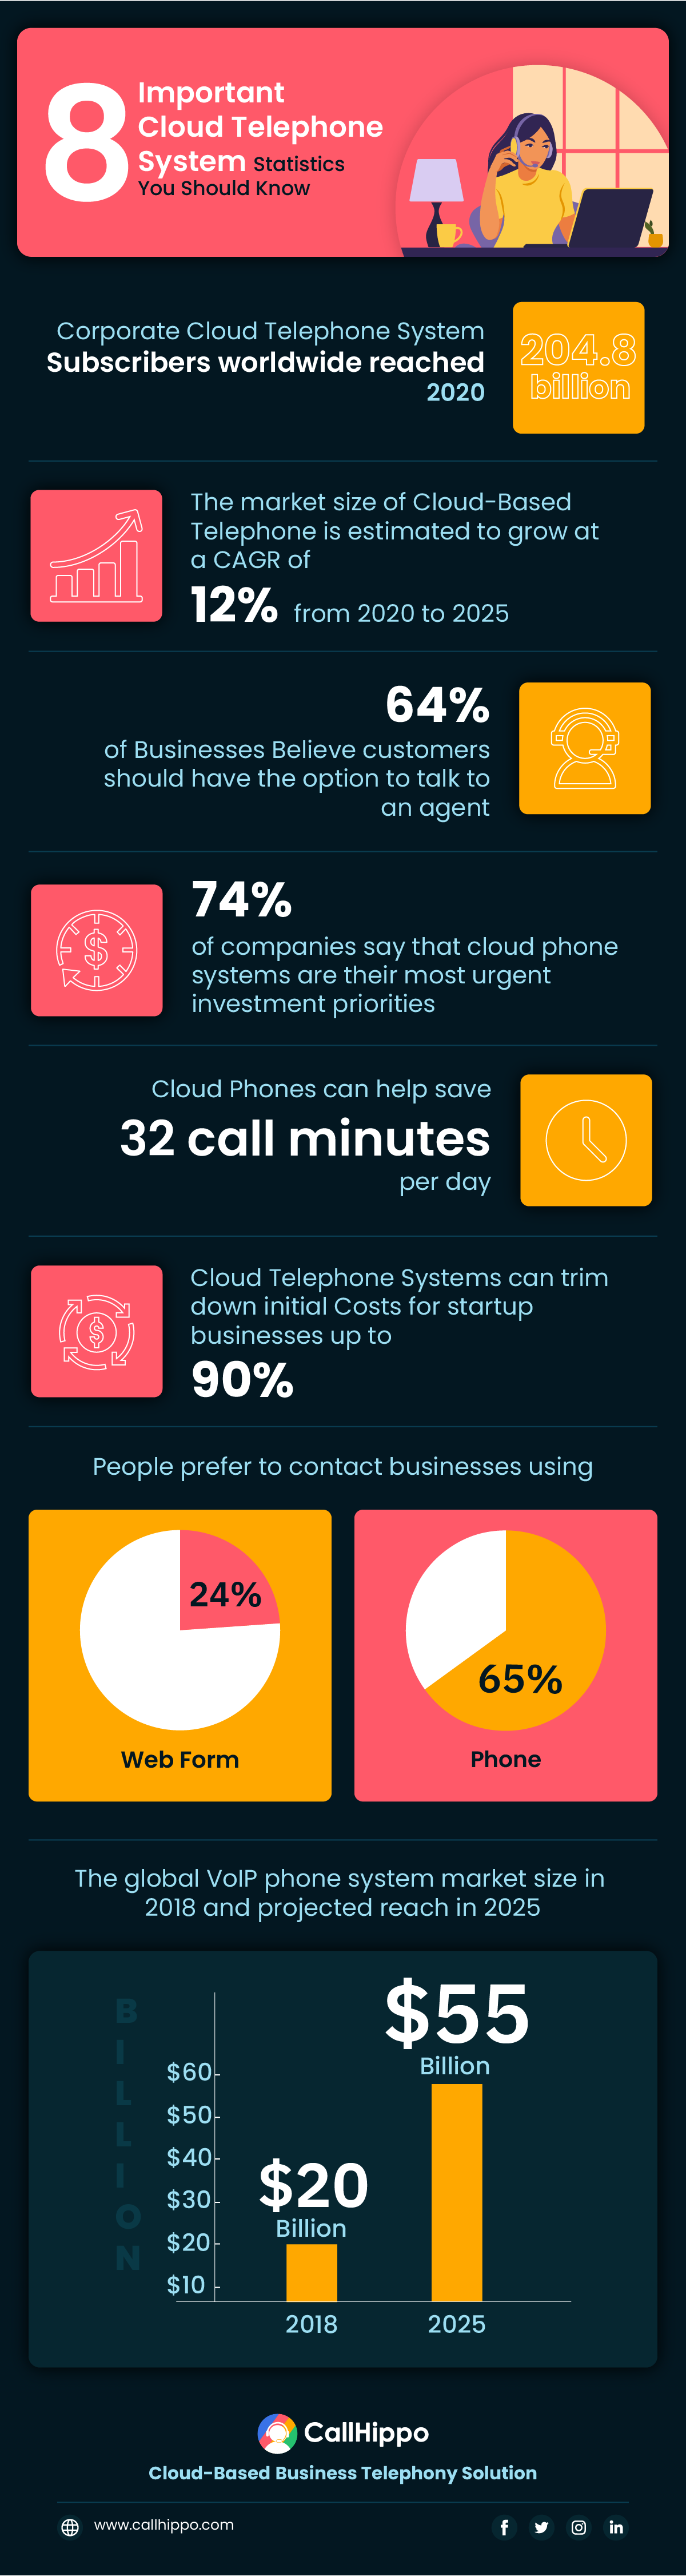 Important Cloud Telephone System Statistics